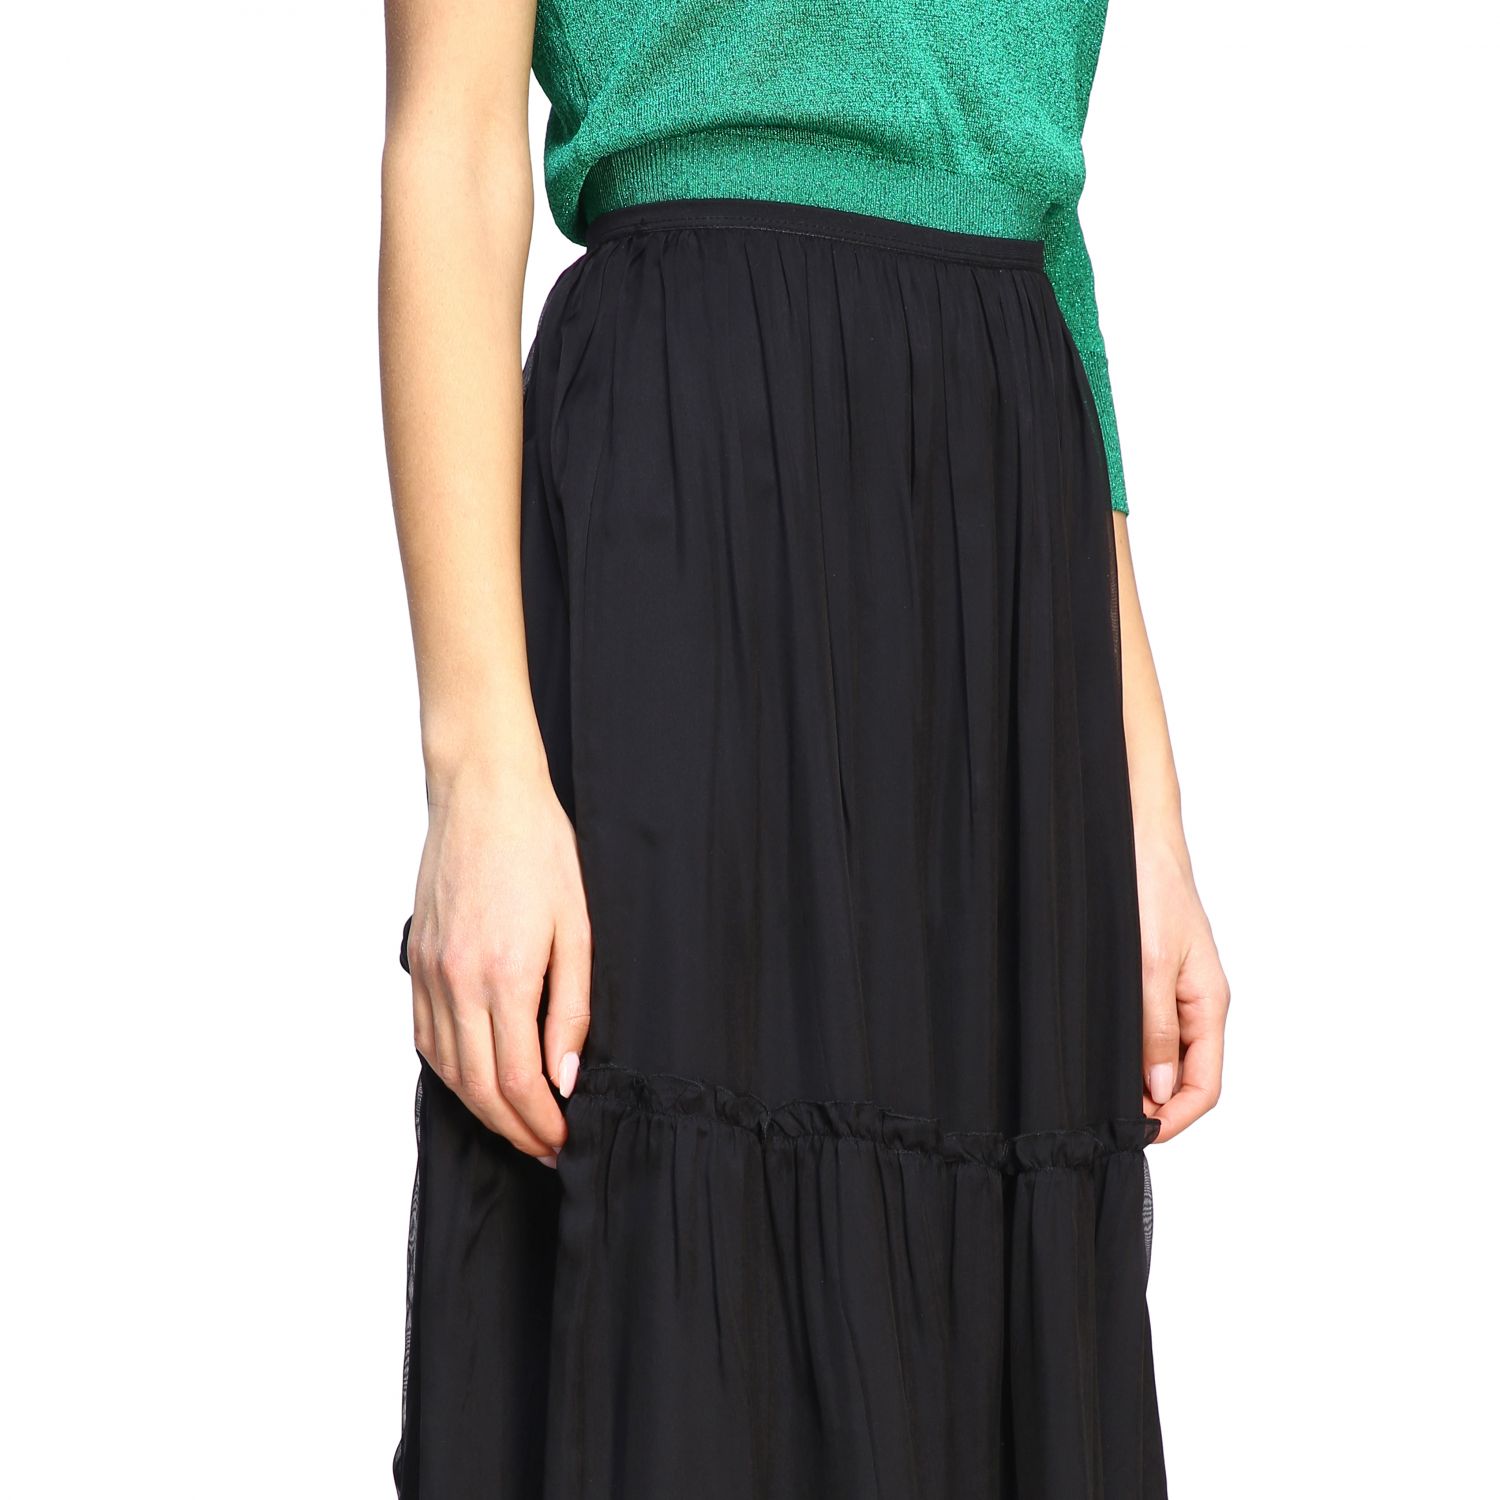 Federica Tosi Outlet: long skirt with flounces - Black | Skirt Federica ...